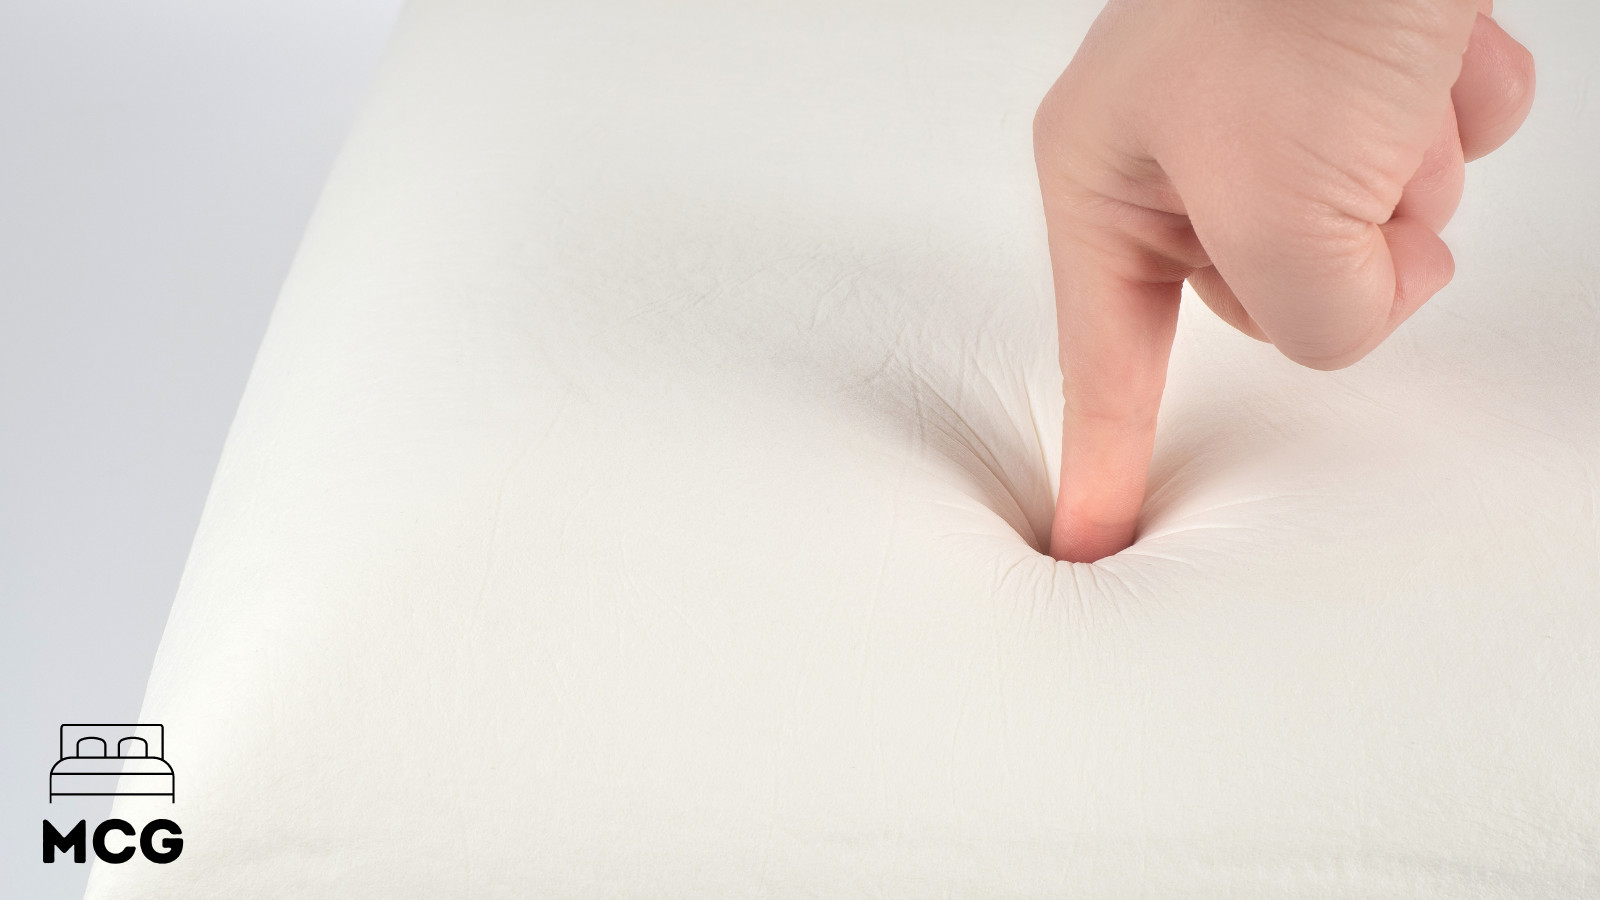 a finger pressing into a memory foam mattress